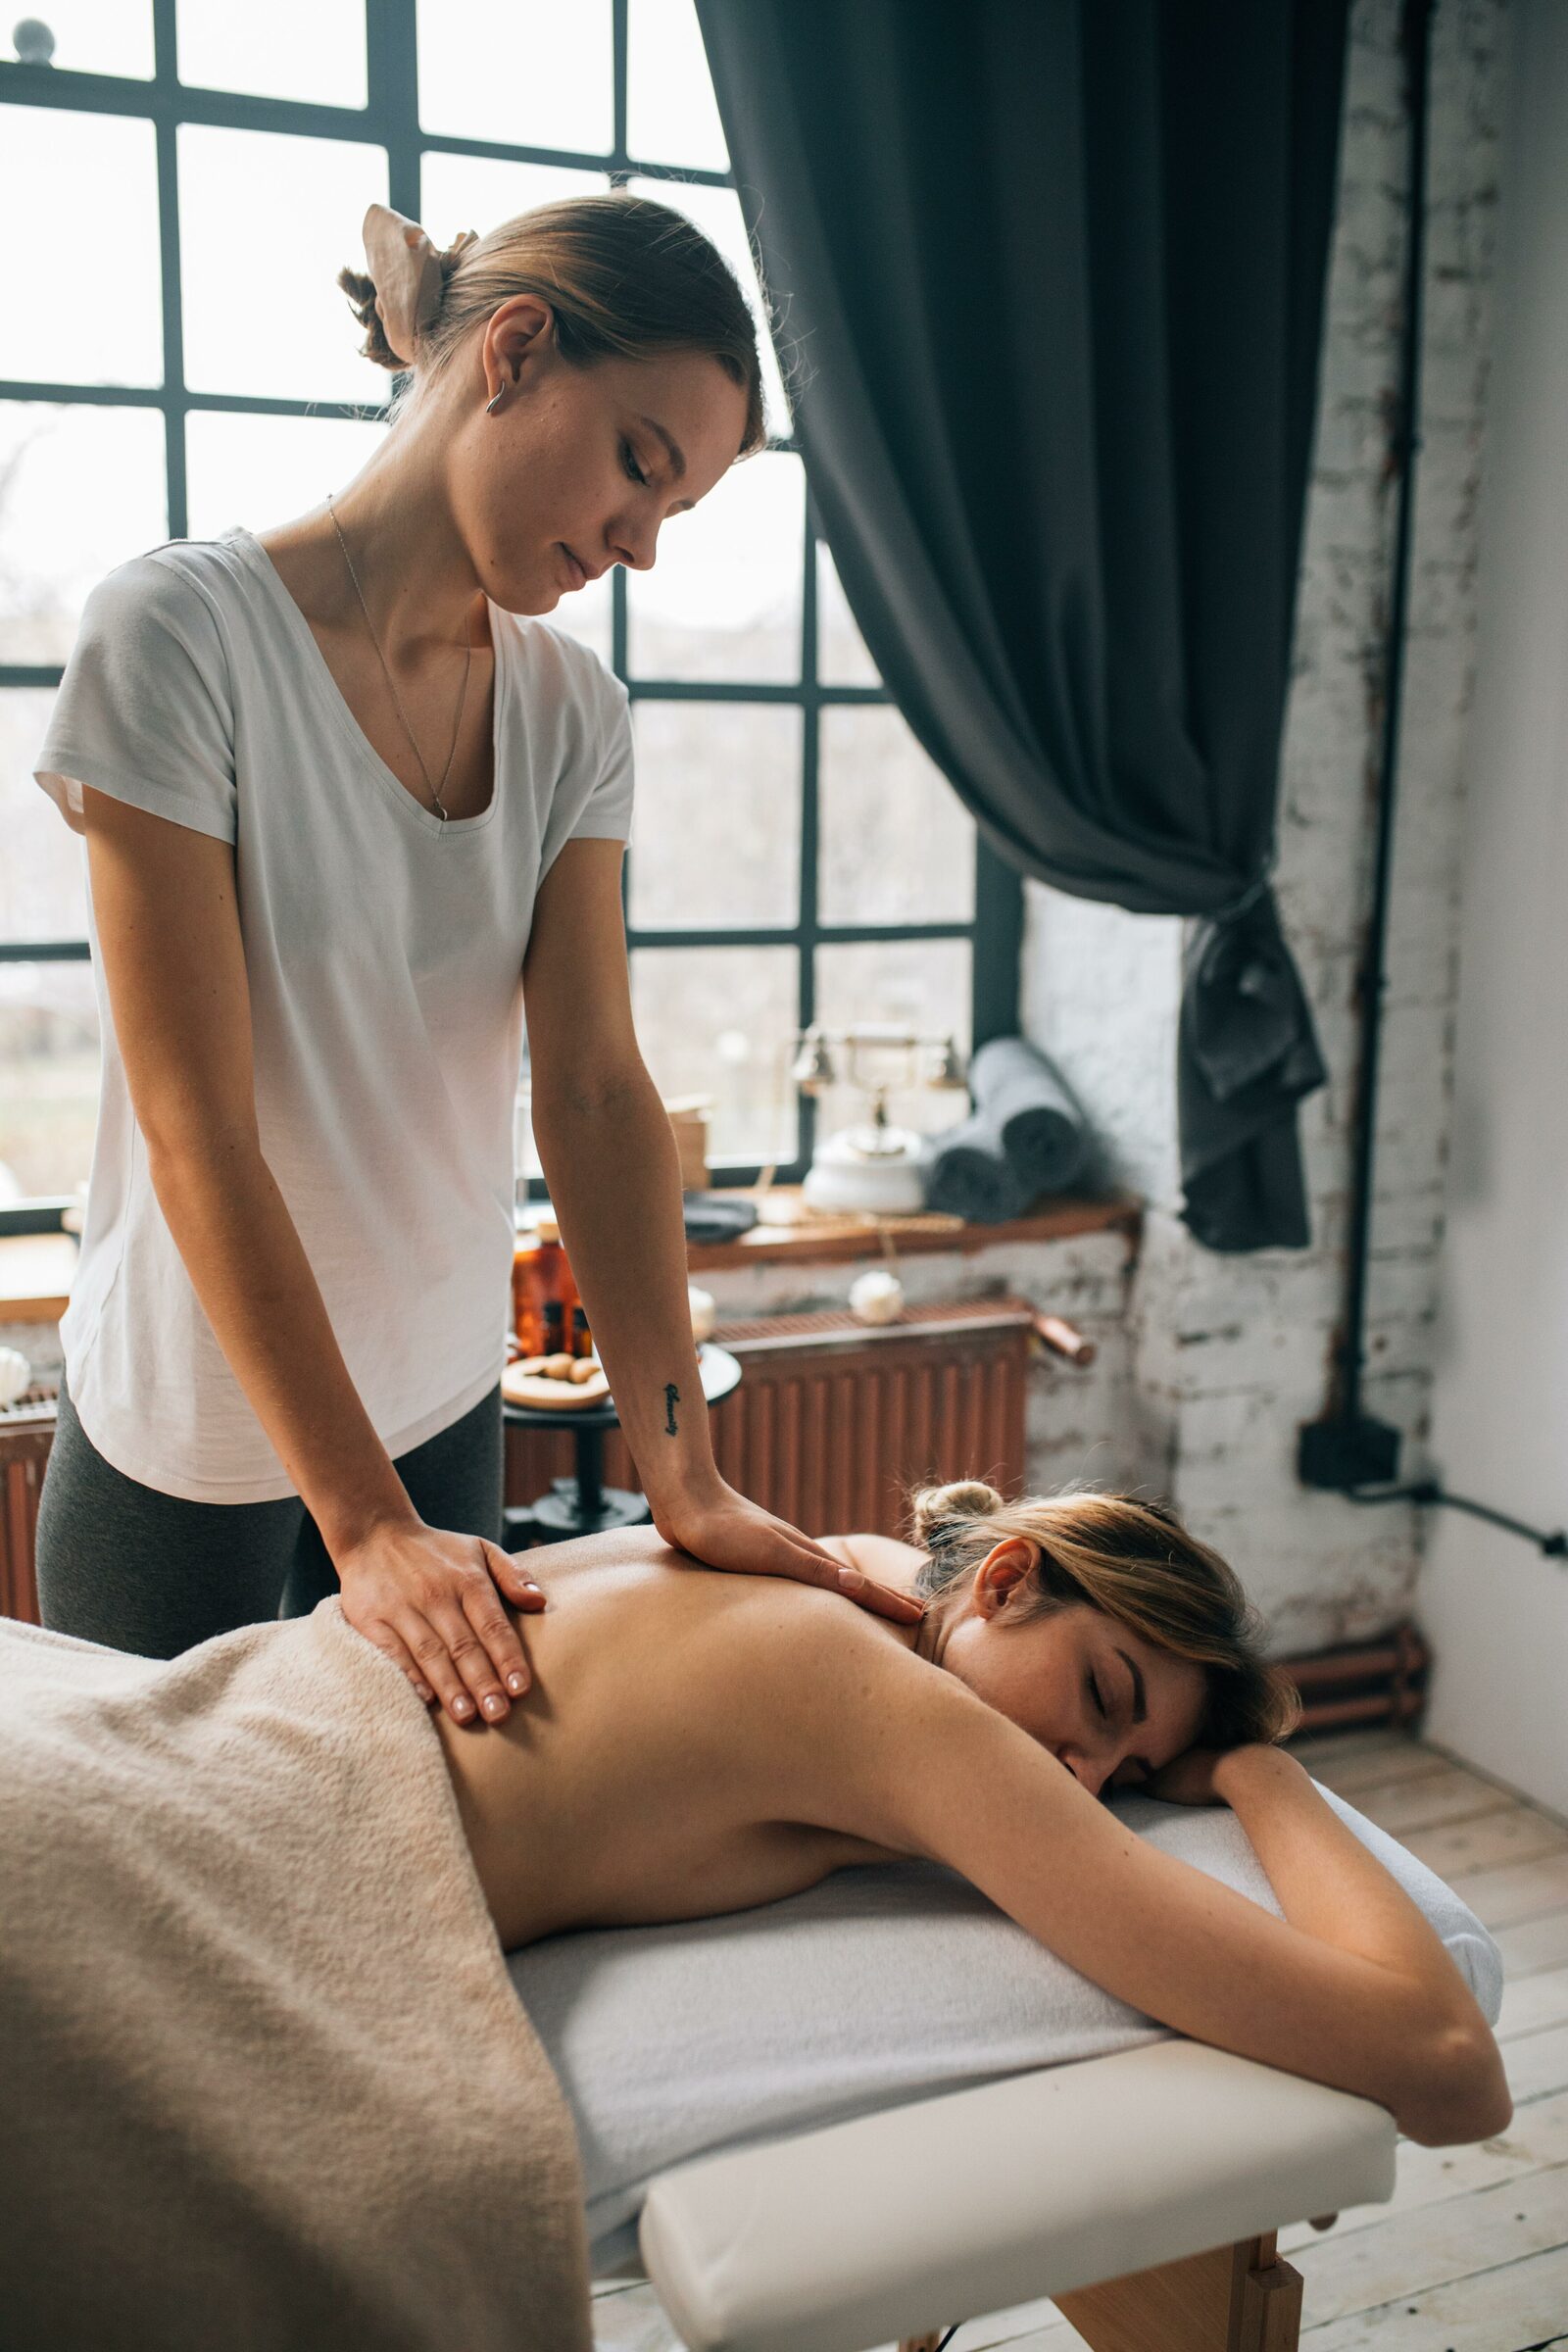 NEW: Massage parlor